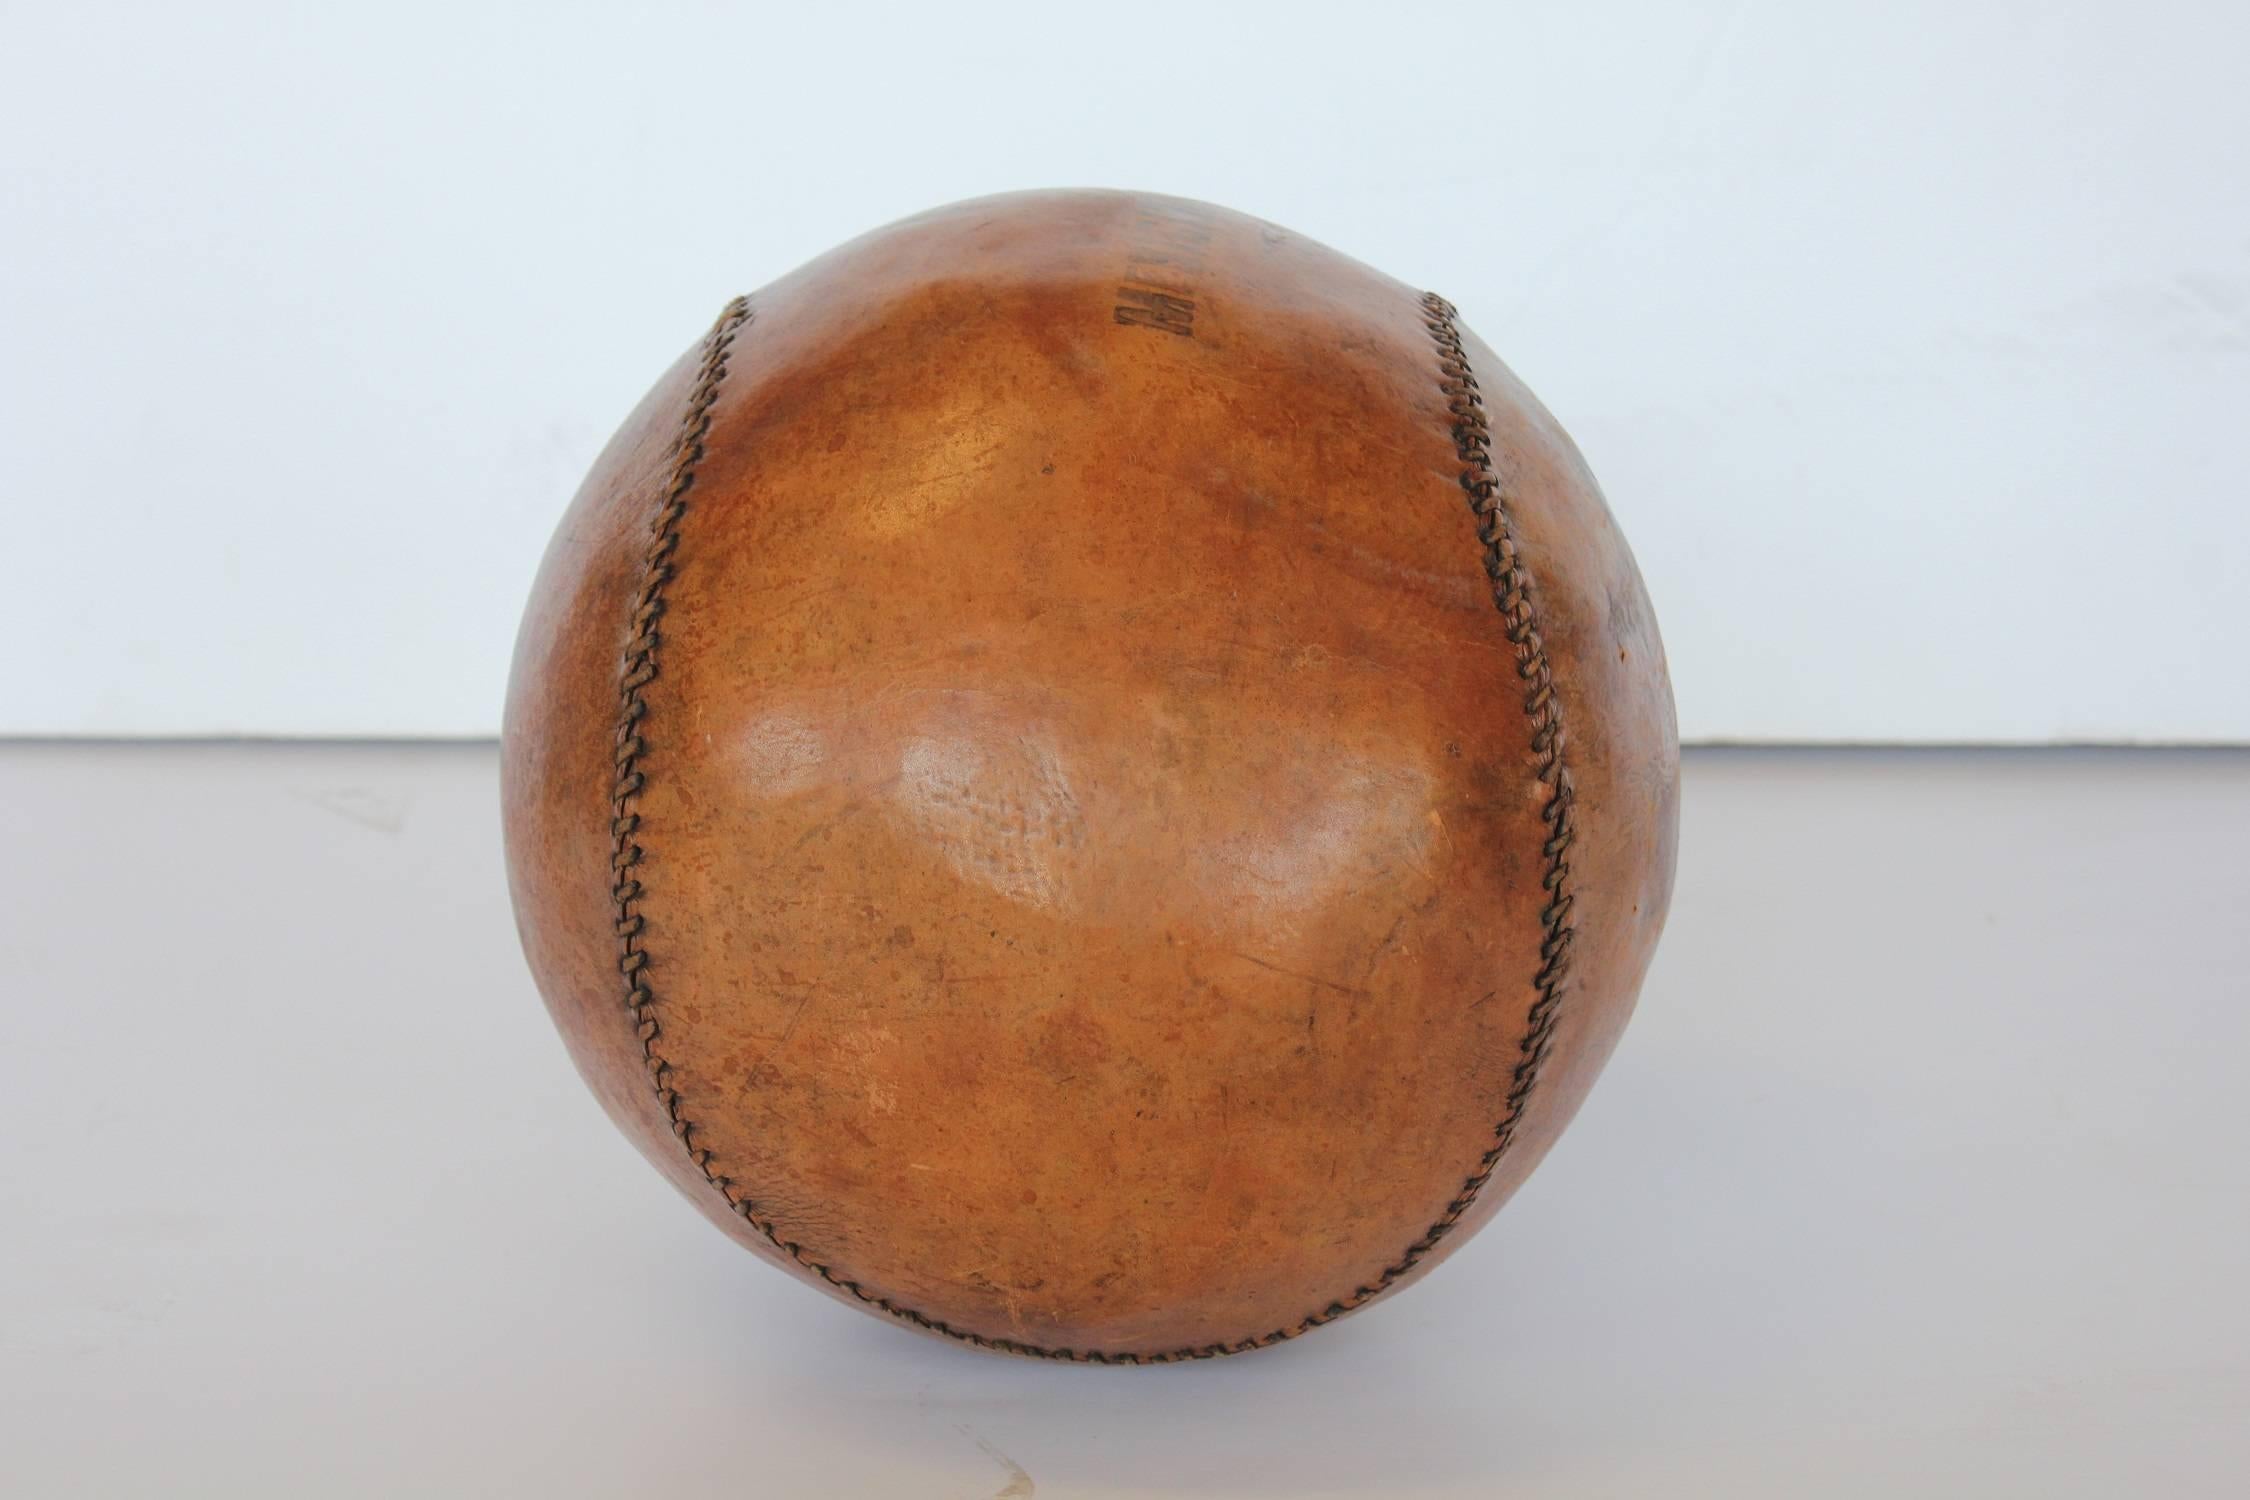 Oversized 1950s hand-stitched leather baseball.